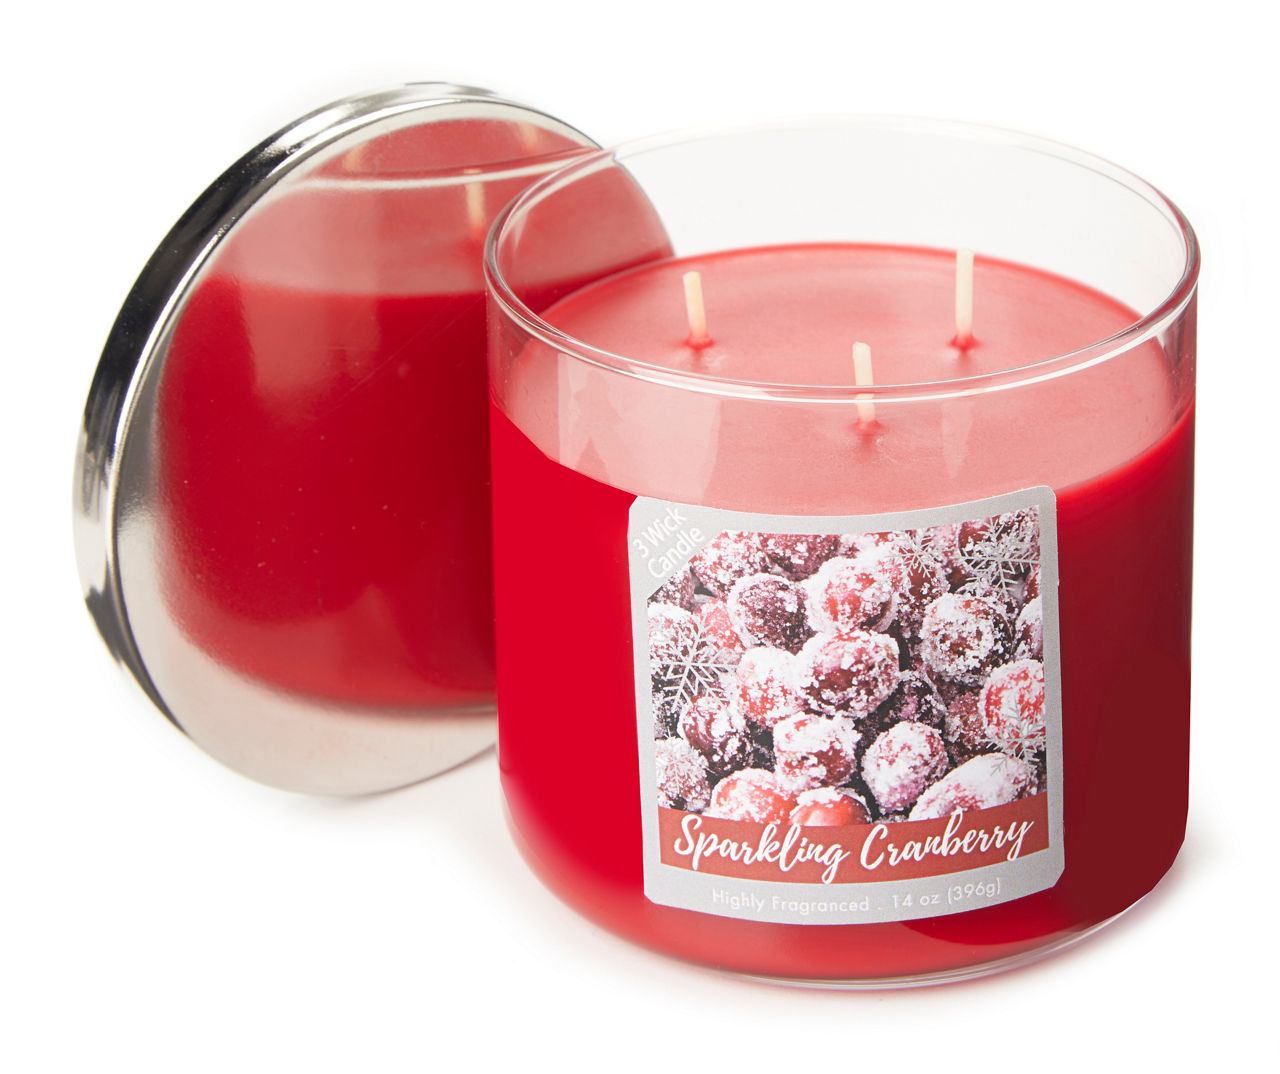 Sparkling Cranberry 3-Wick Jar Candle, 14 Oz. | Big Lots